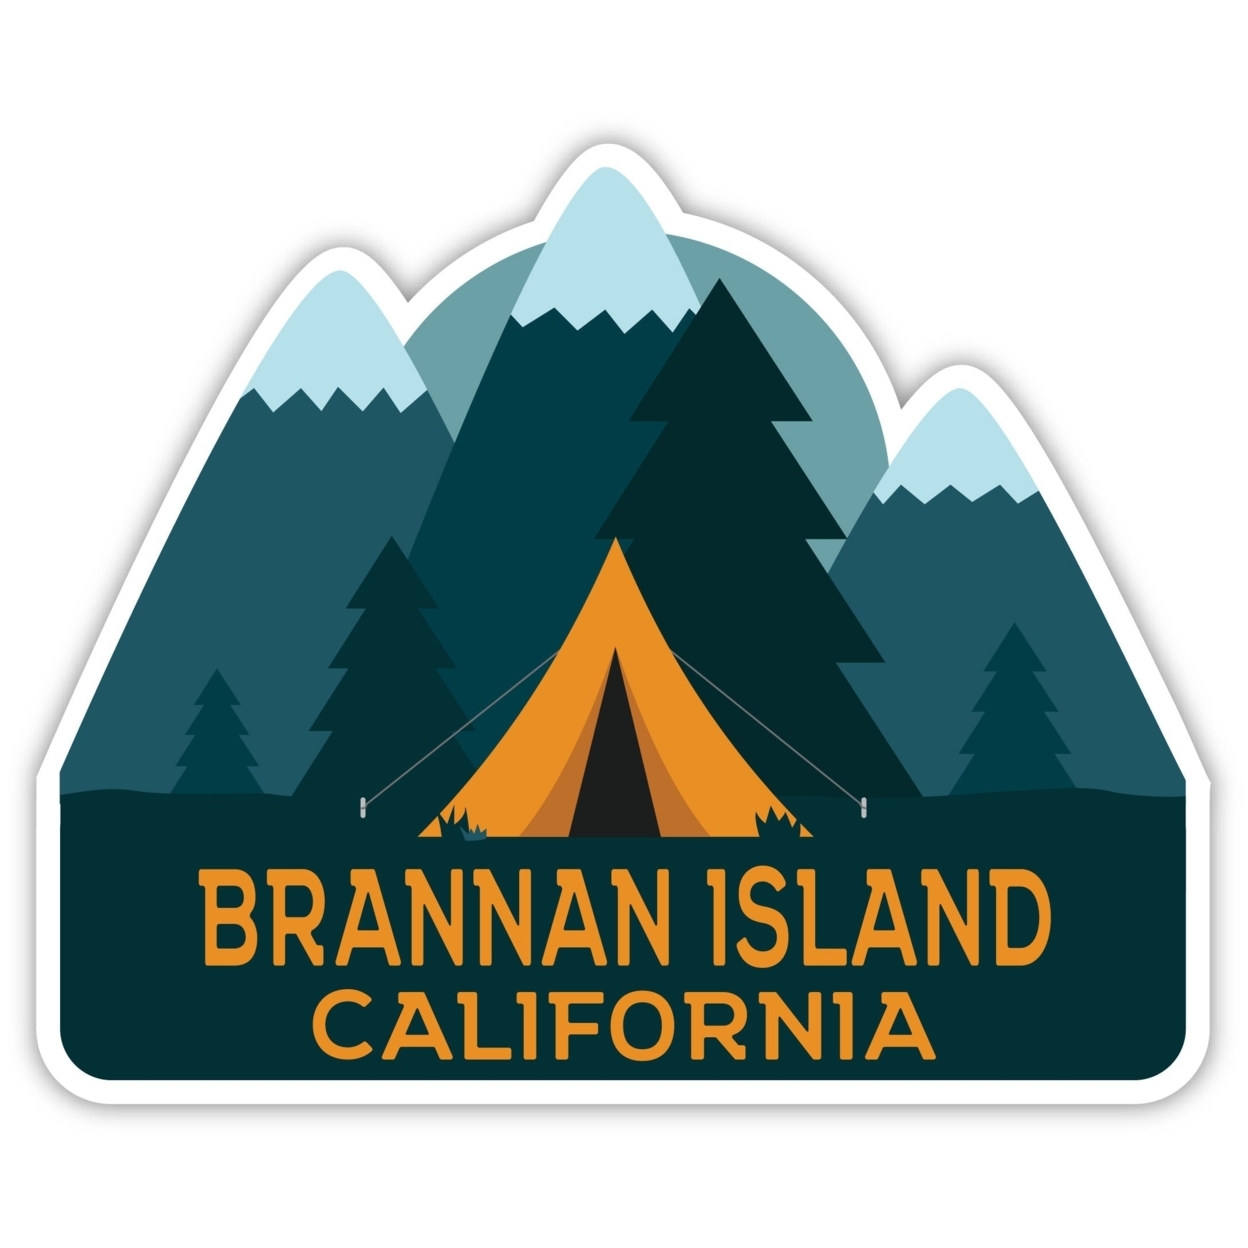 Brannan Island California Souvenir Decorative Stickers (Choose Theme And Size) - 4-Pack, 12-Inch, Tent